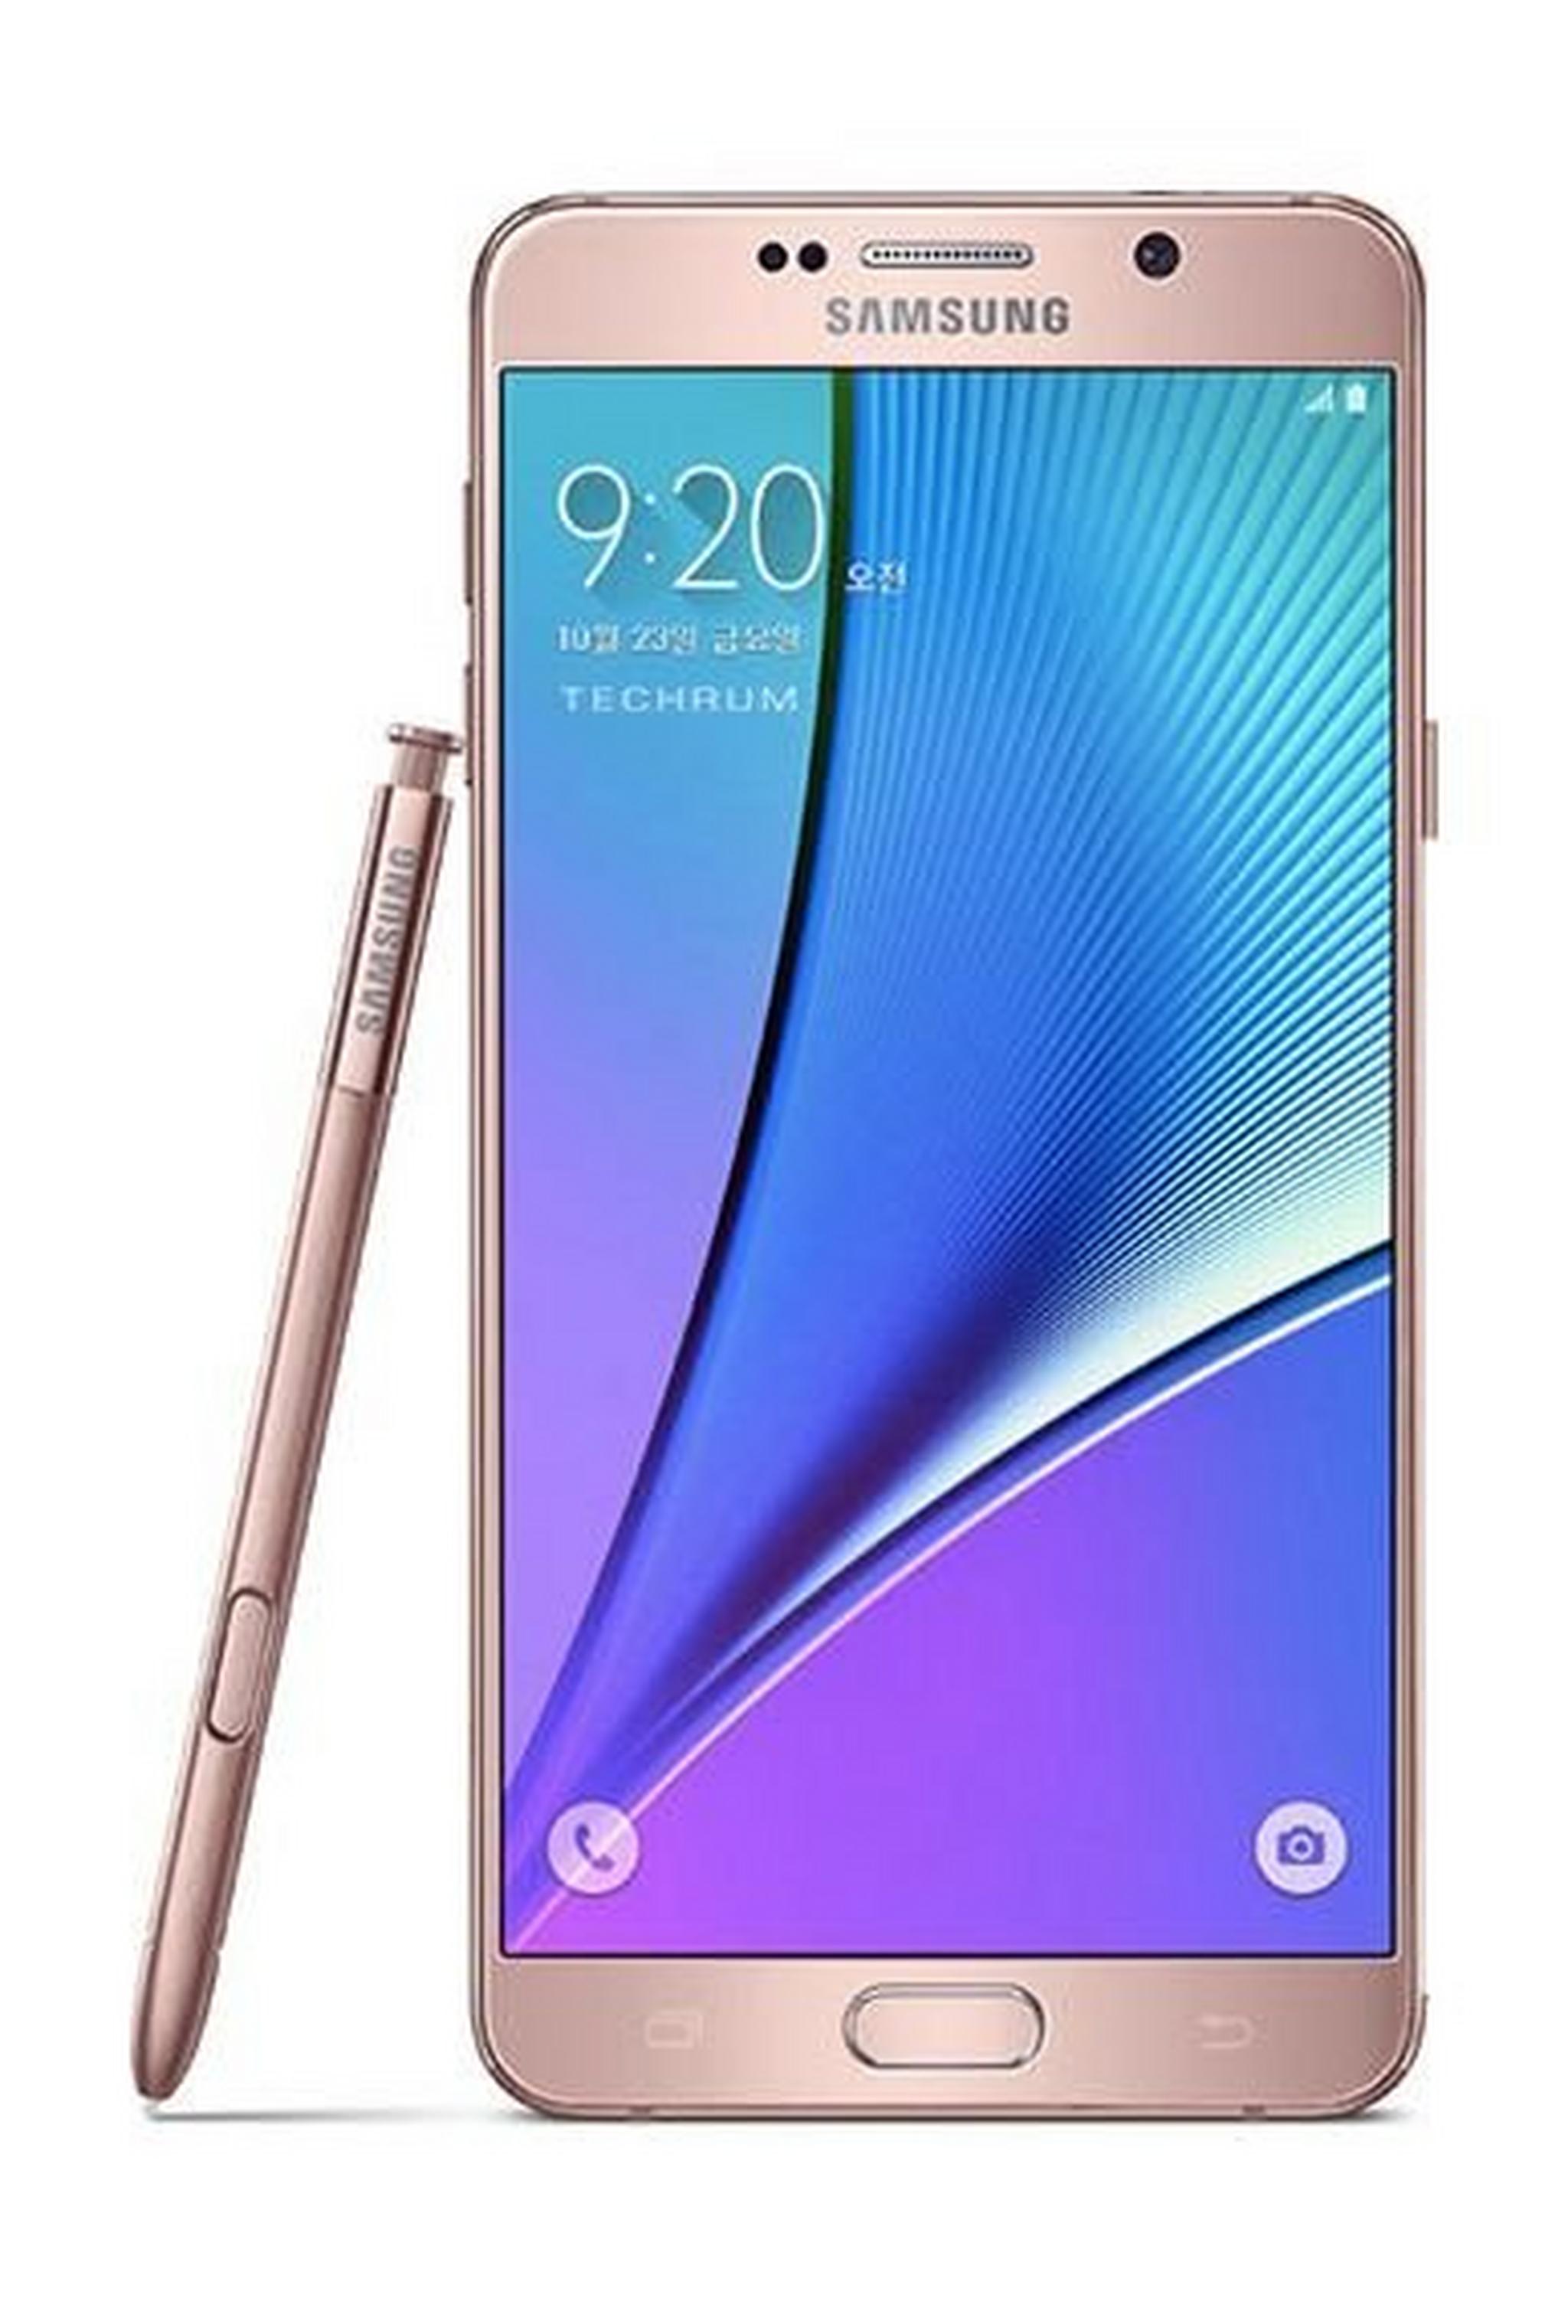 Samsung Galaxy Note 5 32GB 16MP 4G LTE 5.7-inch Smartphone - Pink/Gold